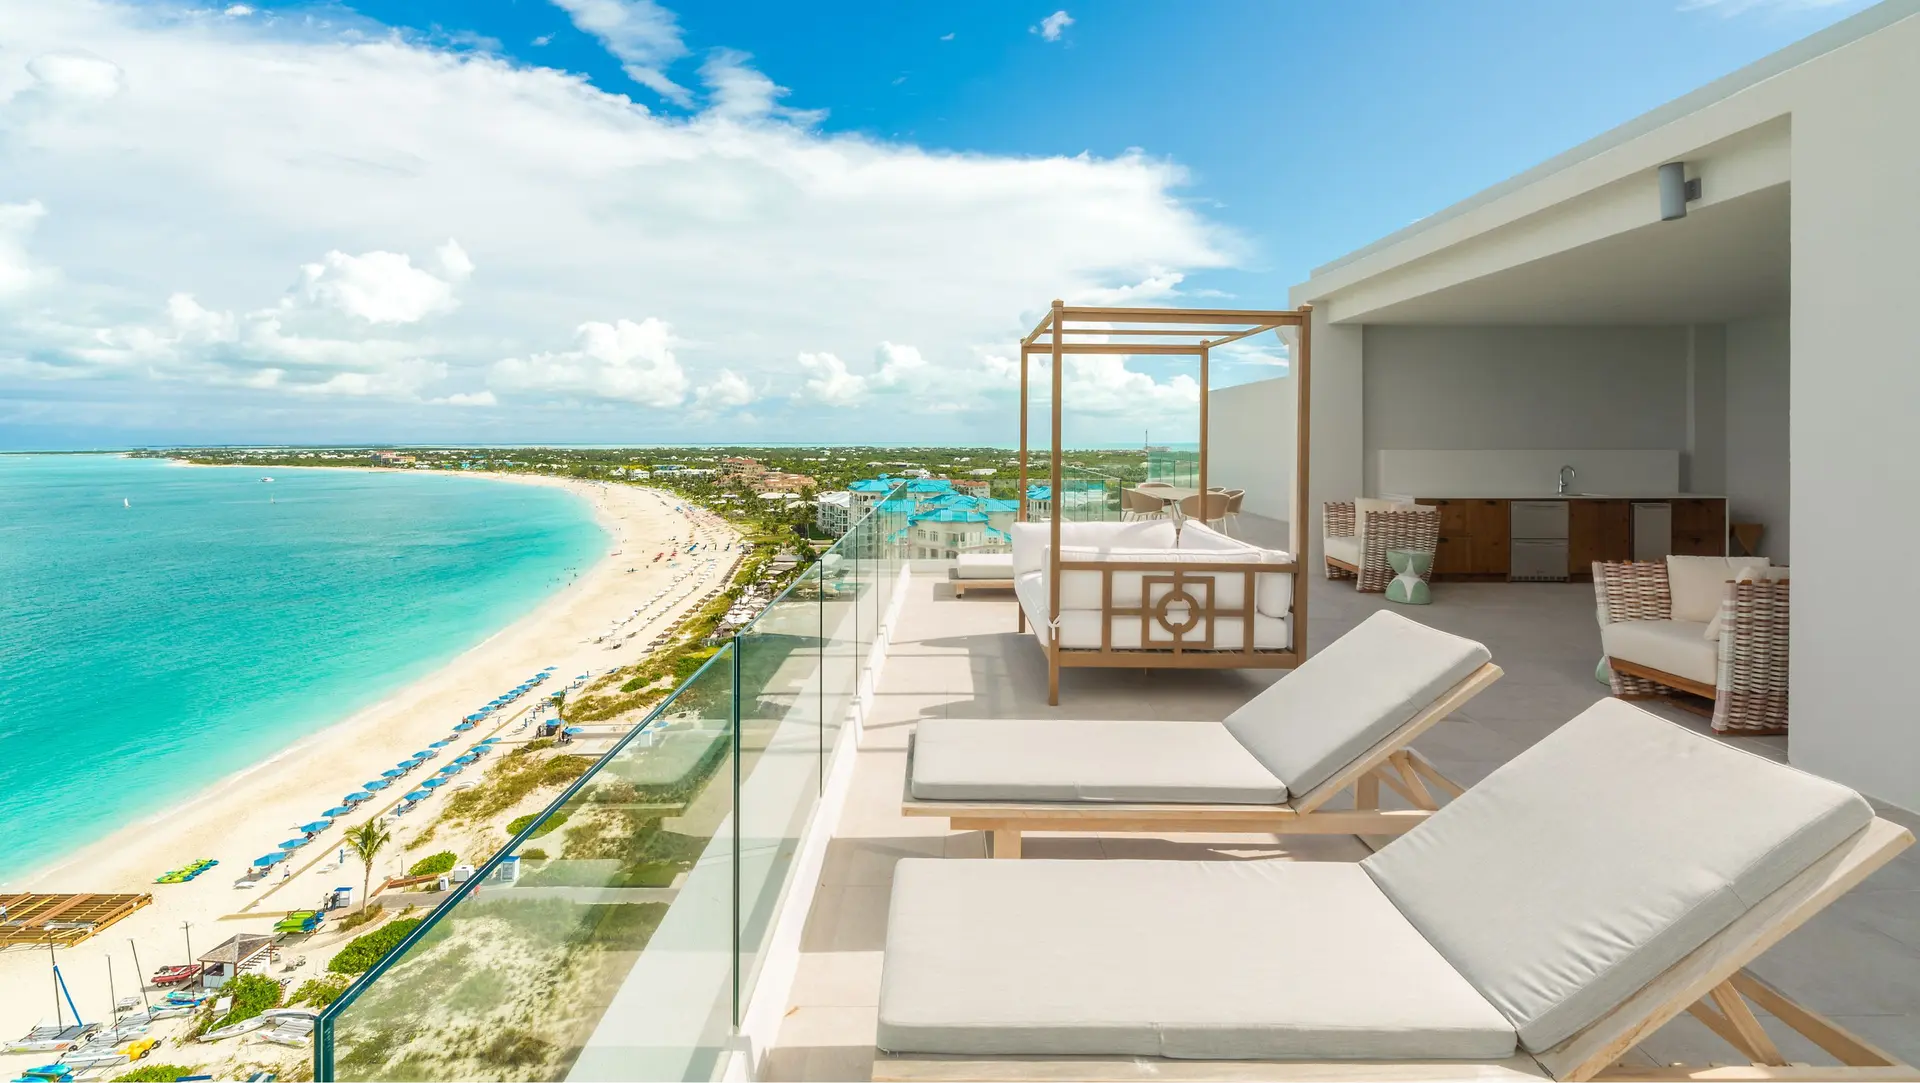 The Ritz-Carlton Residences at Turks & Caicos